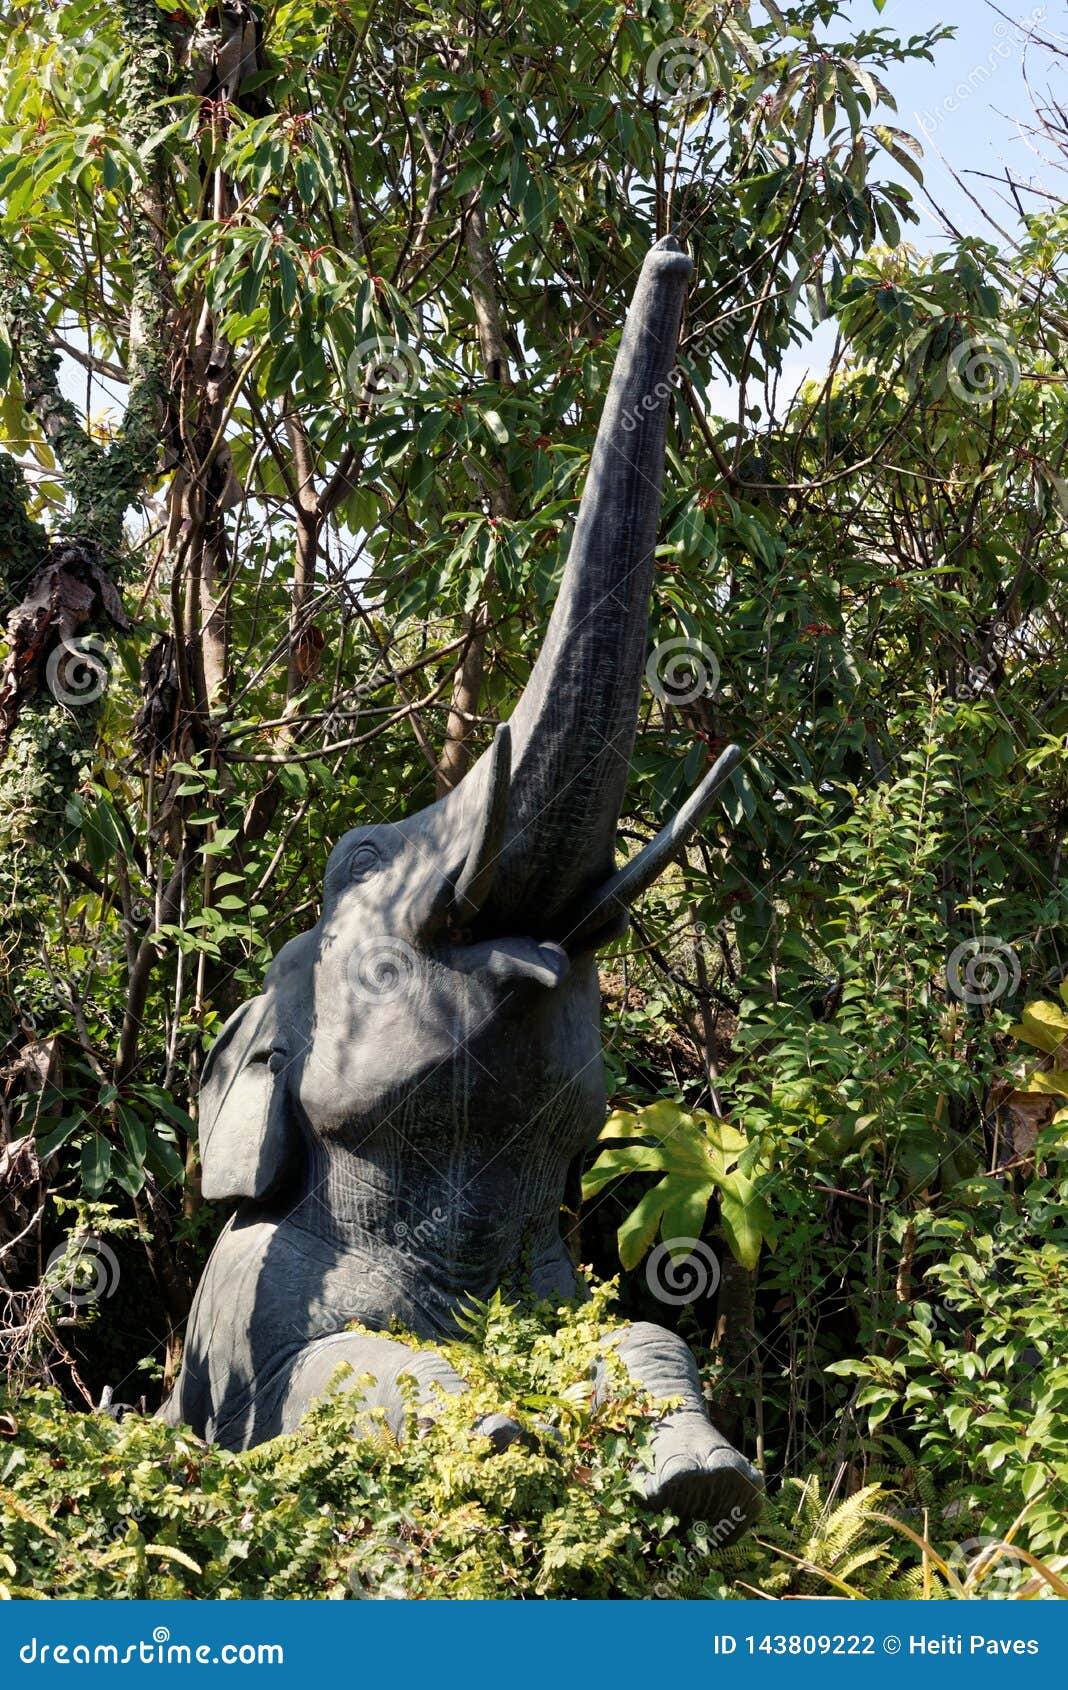 a sculpture of asian elephant